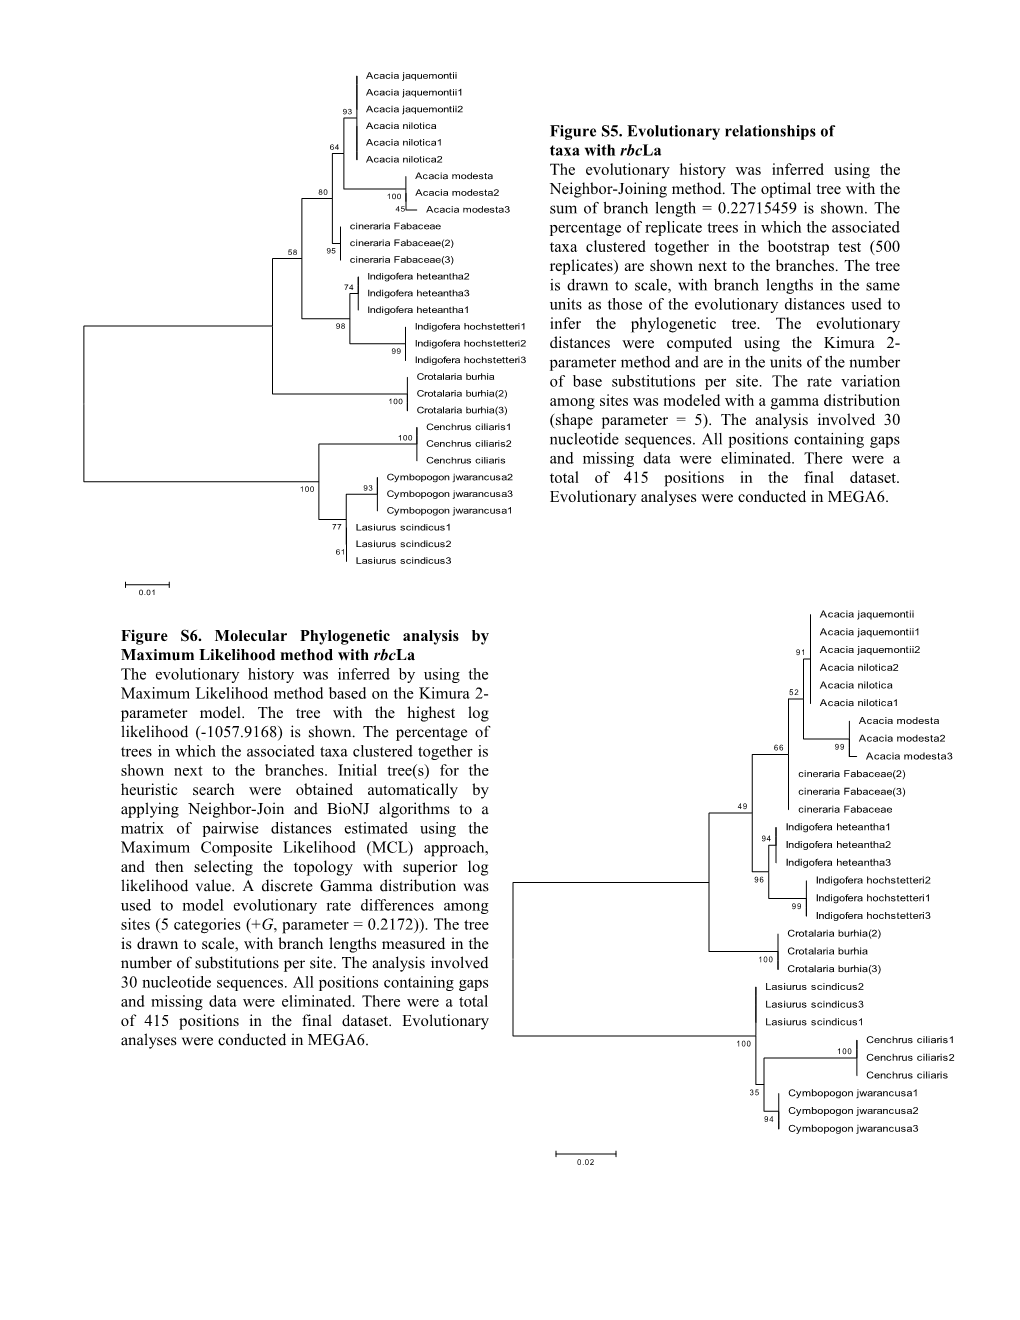 Figure S2. Molecular Phylogenetic Analysis by Maximum Likelihood Method with ITS2